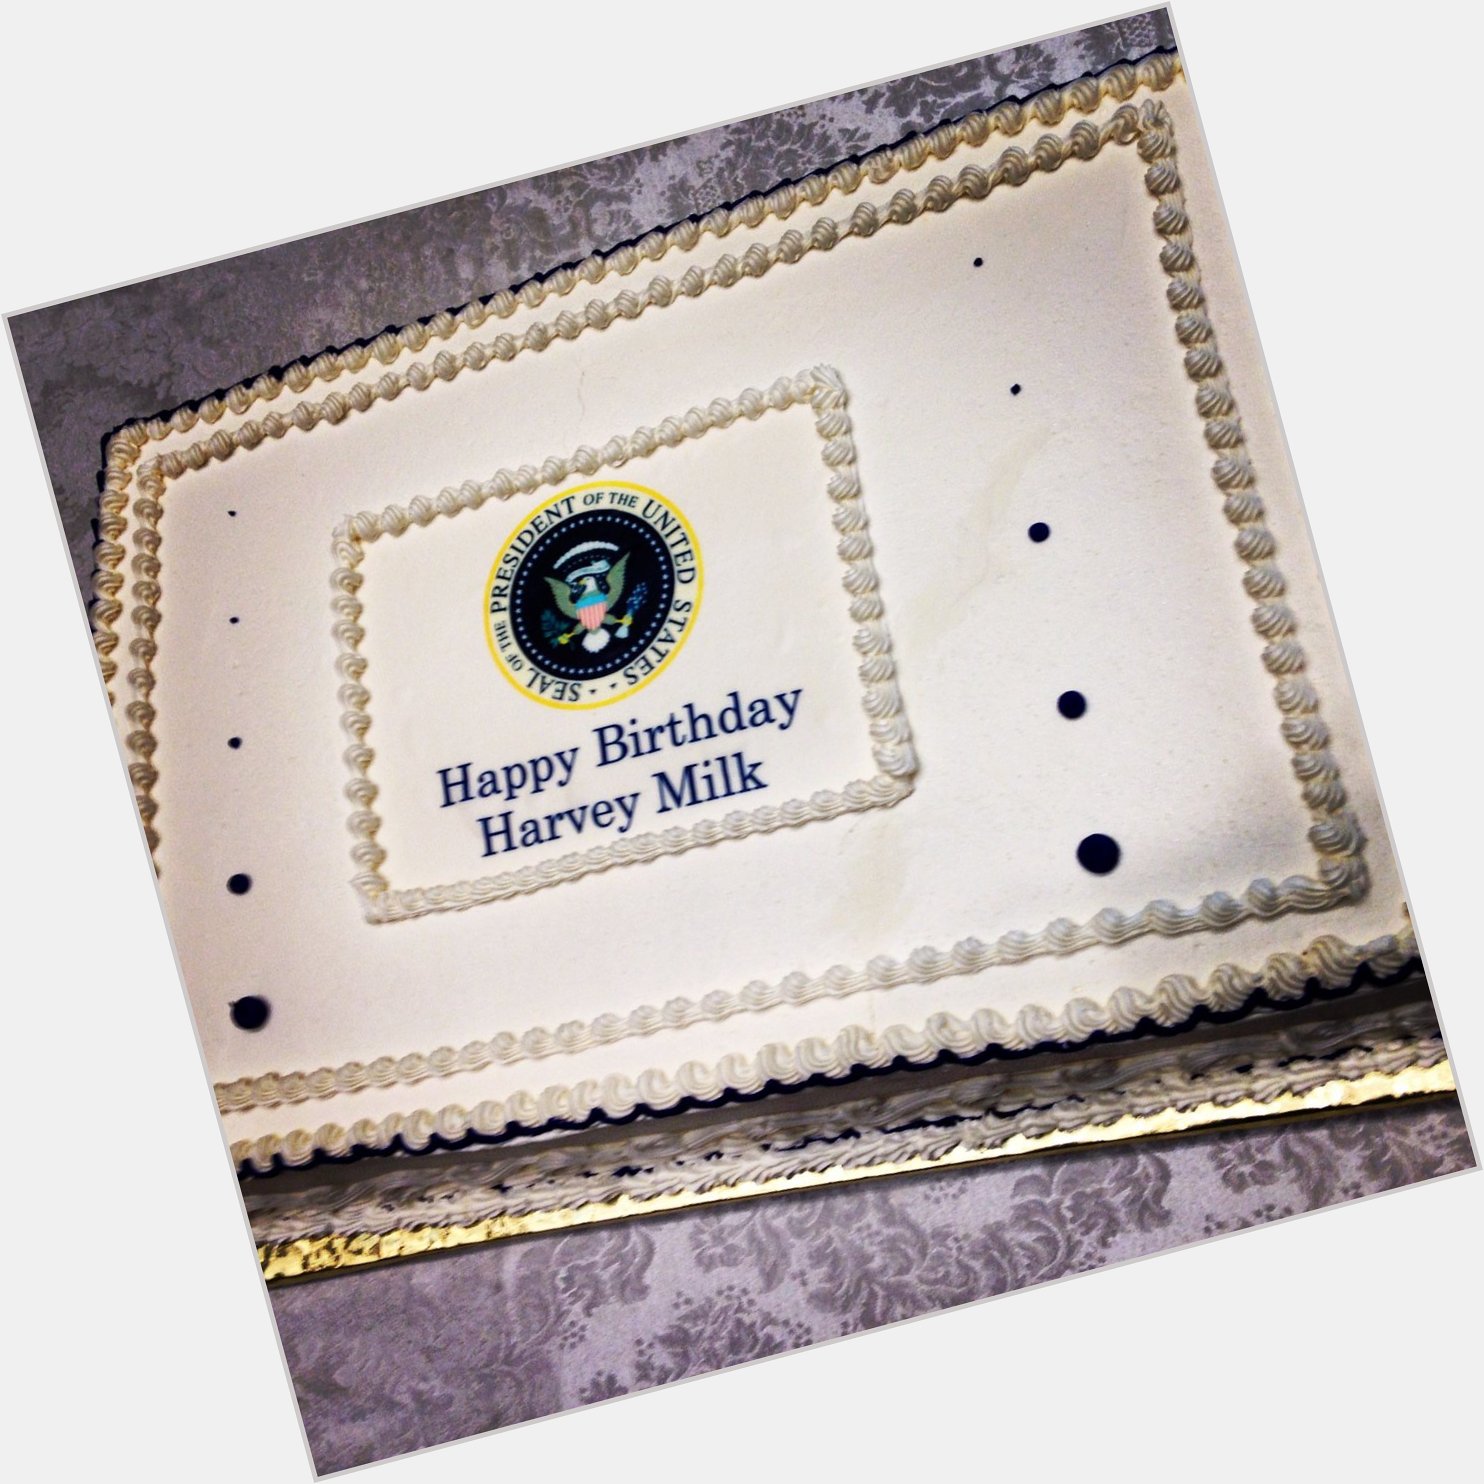 Happy Birthday, Harvey Milk. Thanks for giving the \us\s\  